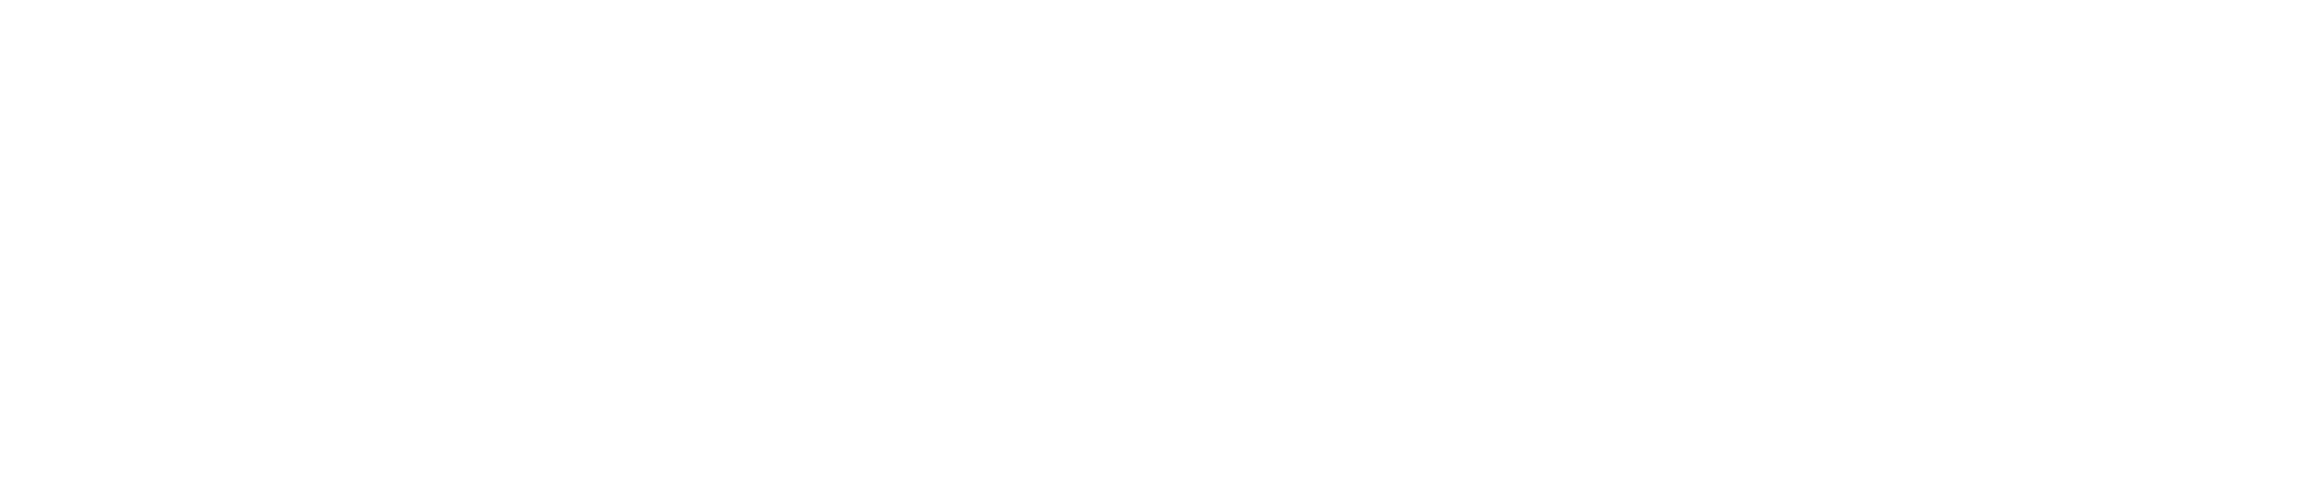 Play Station4 Logo Design PNG